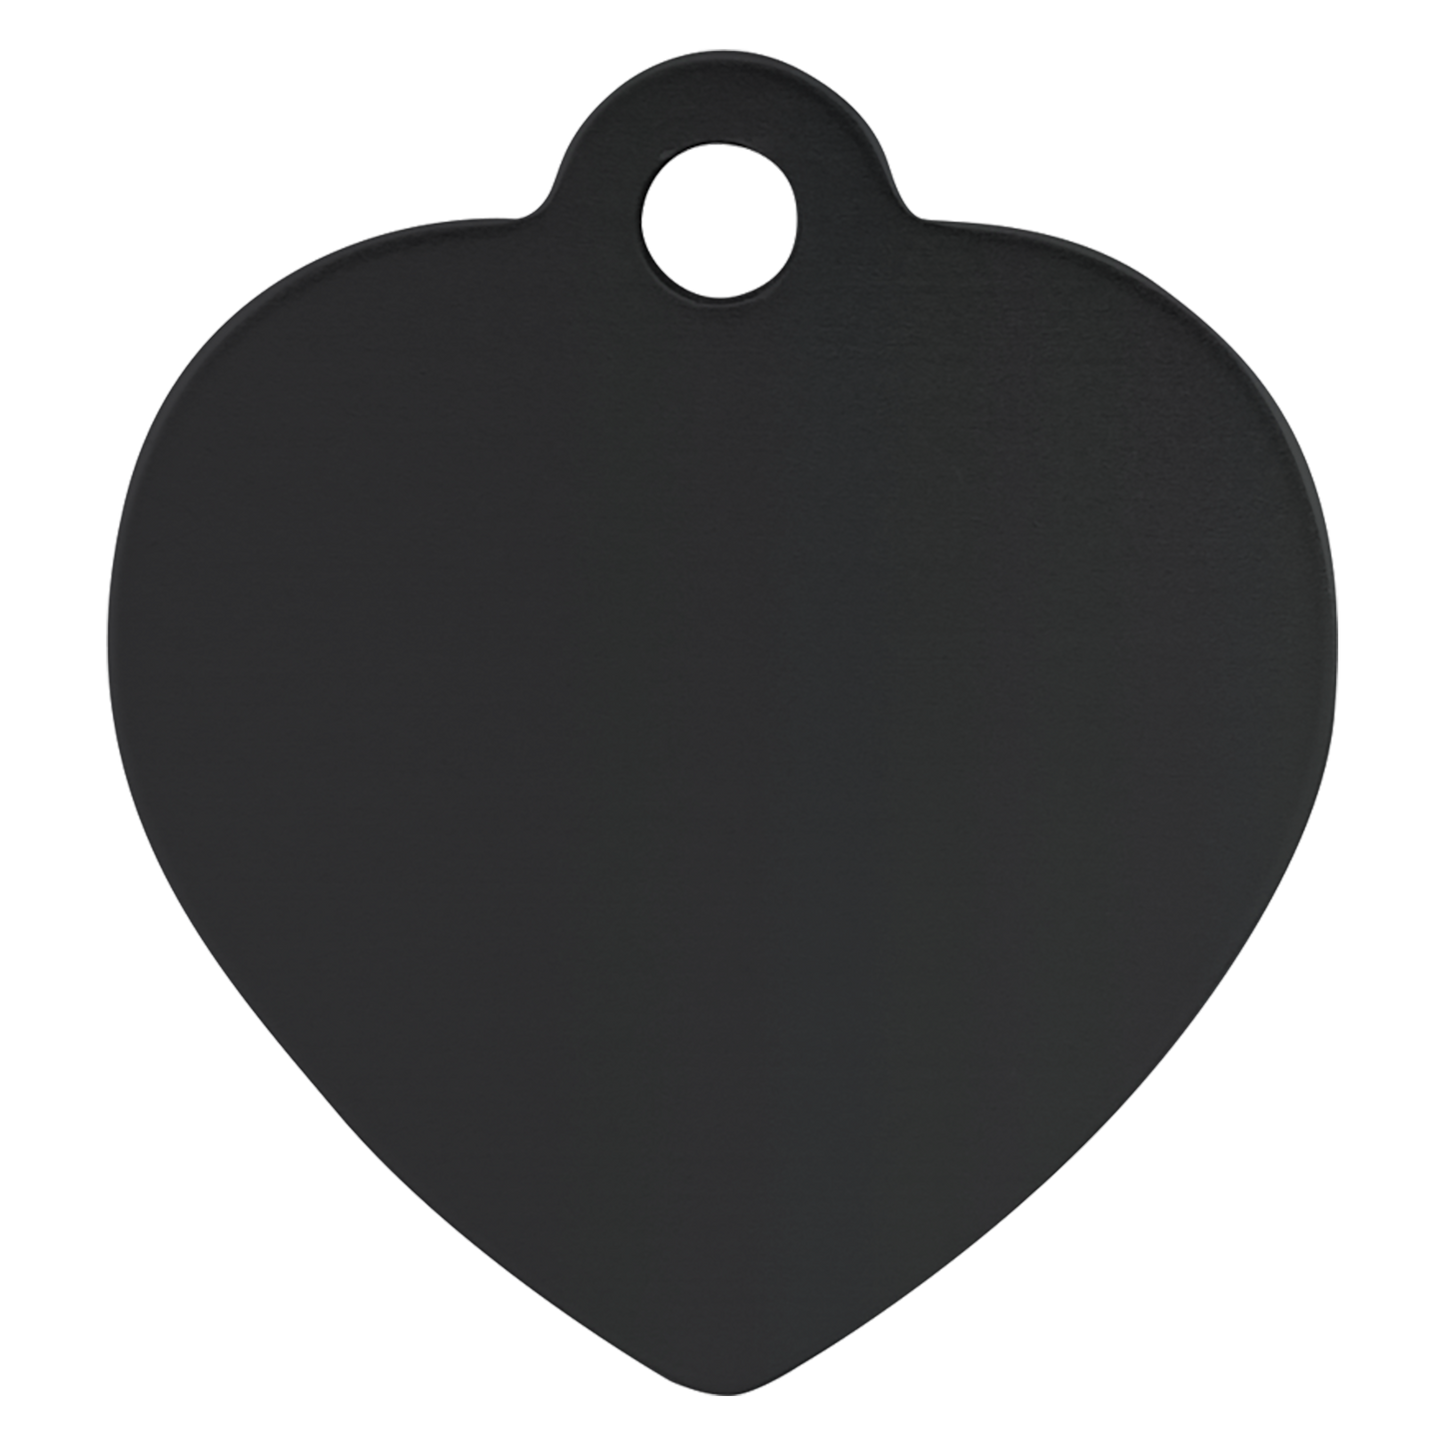 B.O.G.O. SMALL 1" x 1" Black Anodized Aluminum Heart Pet Tag